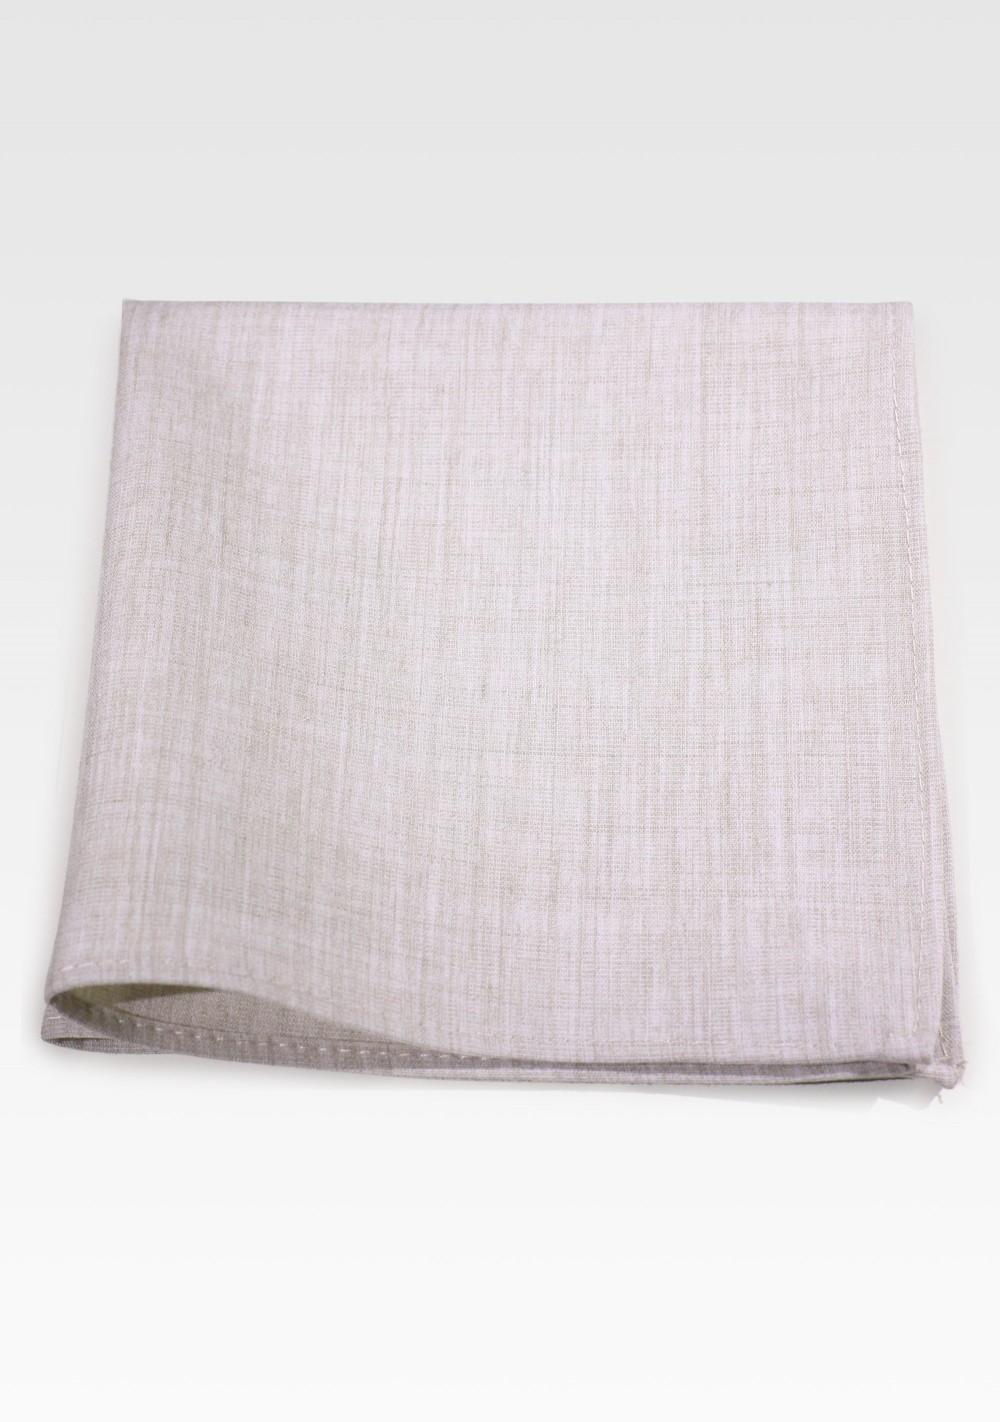 Matte Linen Colored Pocket Square in Cotton